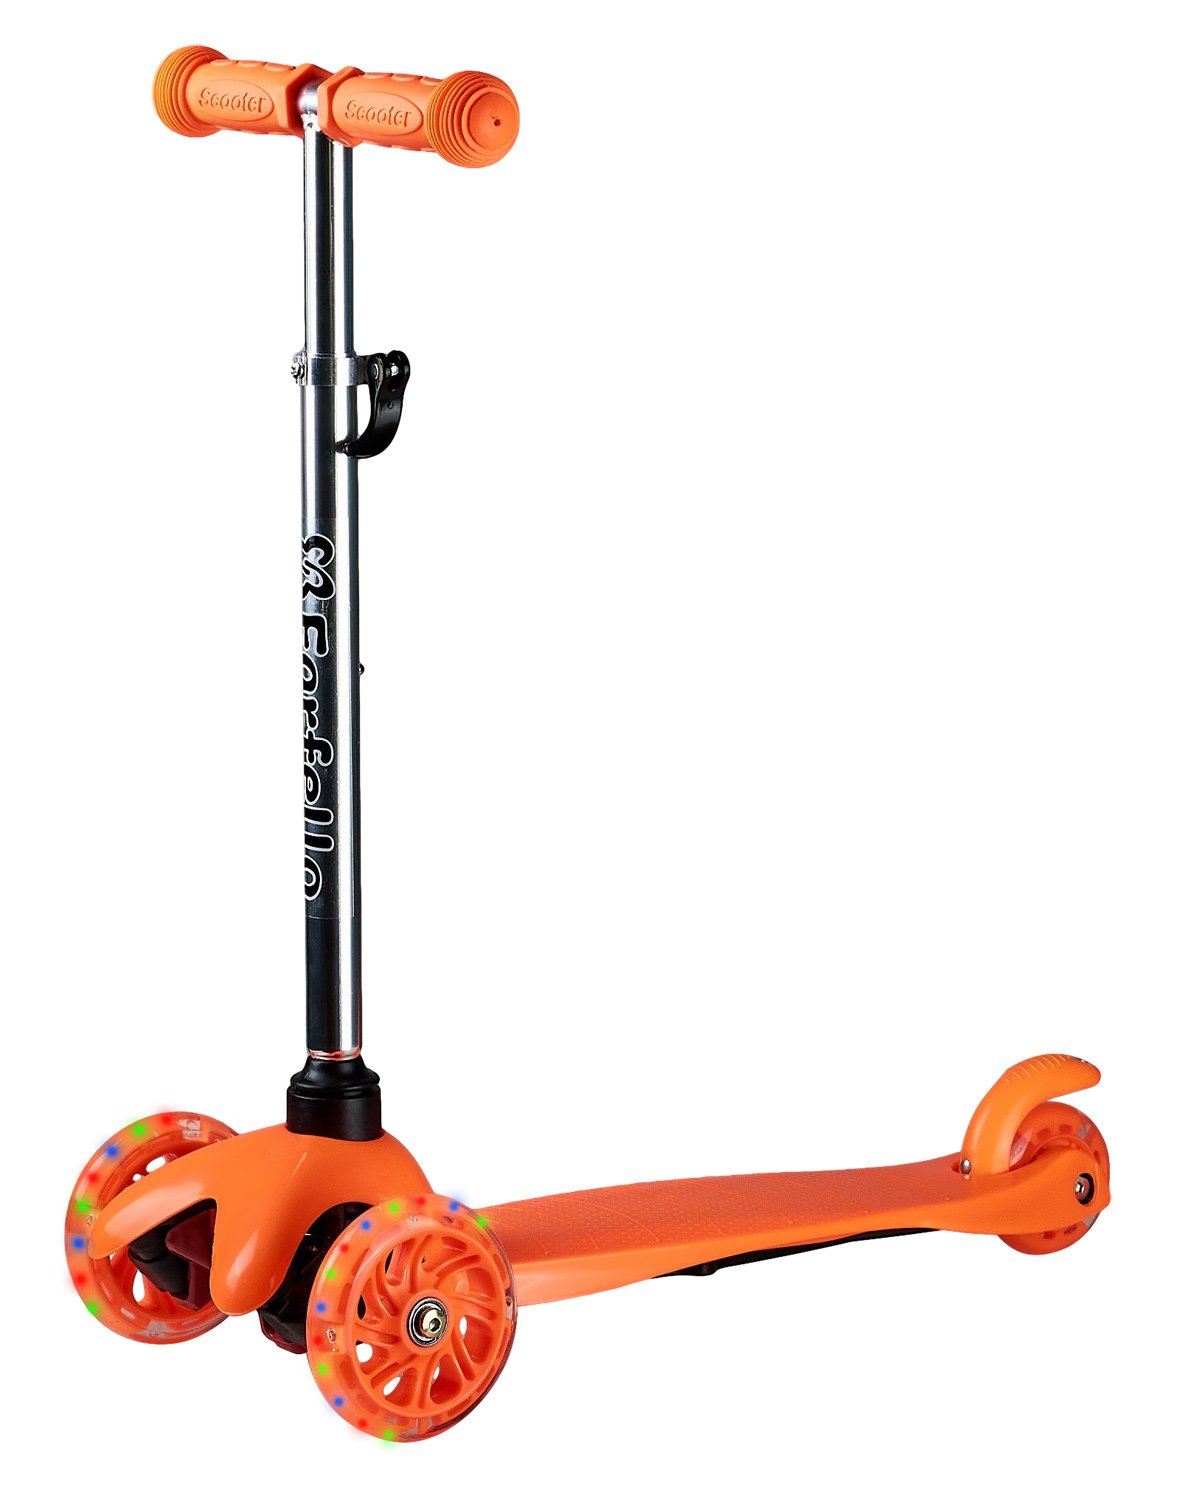 Самокат Farfello WX-MINI-881, детский, трёхколёсный, нагрузка до 60 кг, orange/оранжевый самокат leader kids lk 102 оранжевый